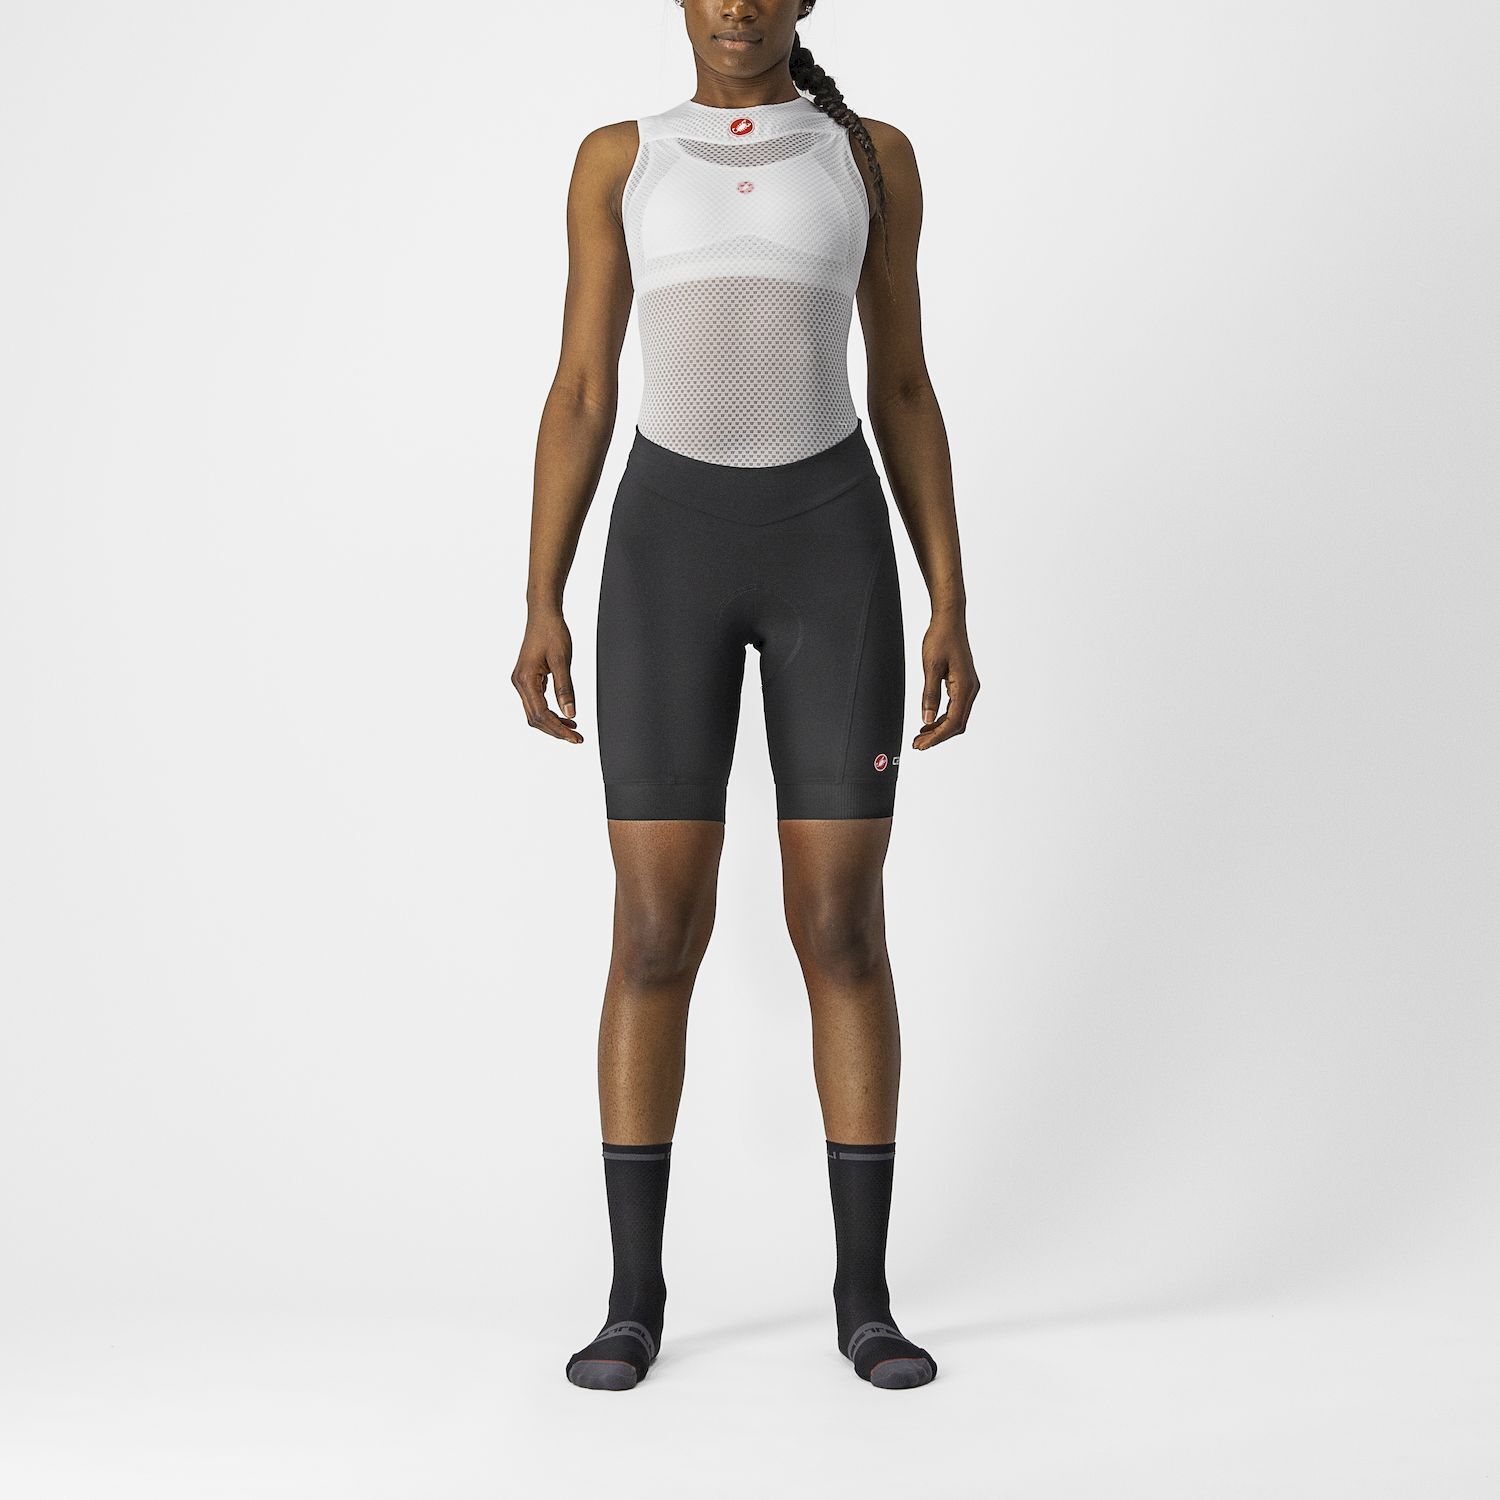 Castelli Endurance Short - Cycling shorts - Women's